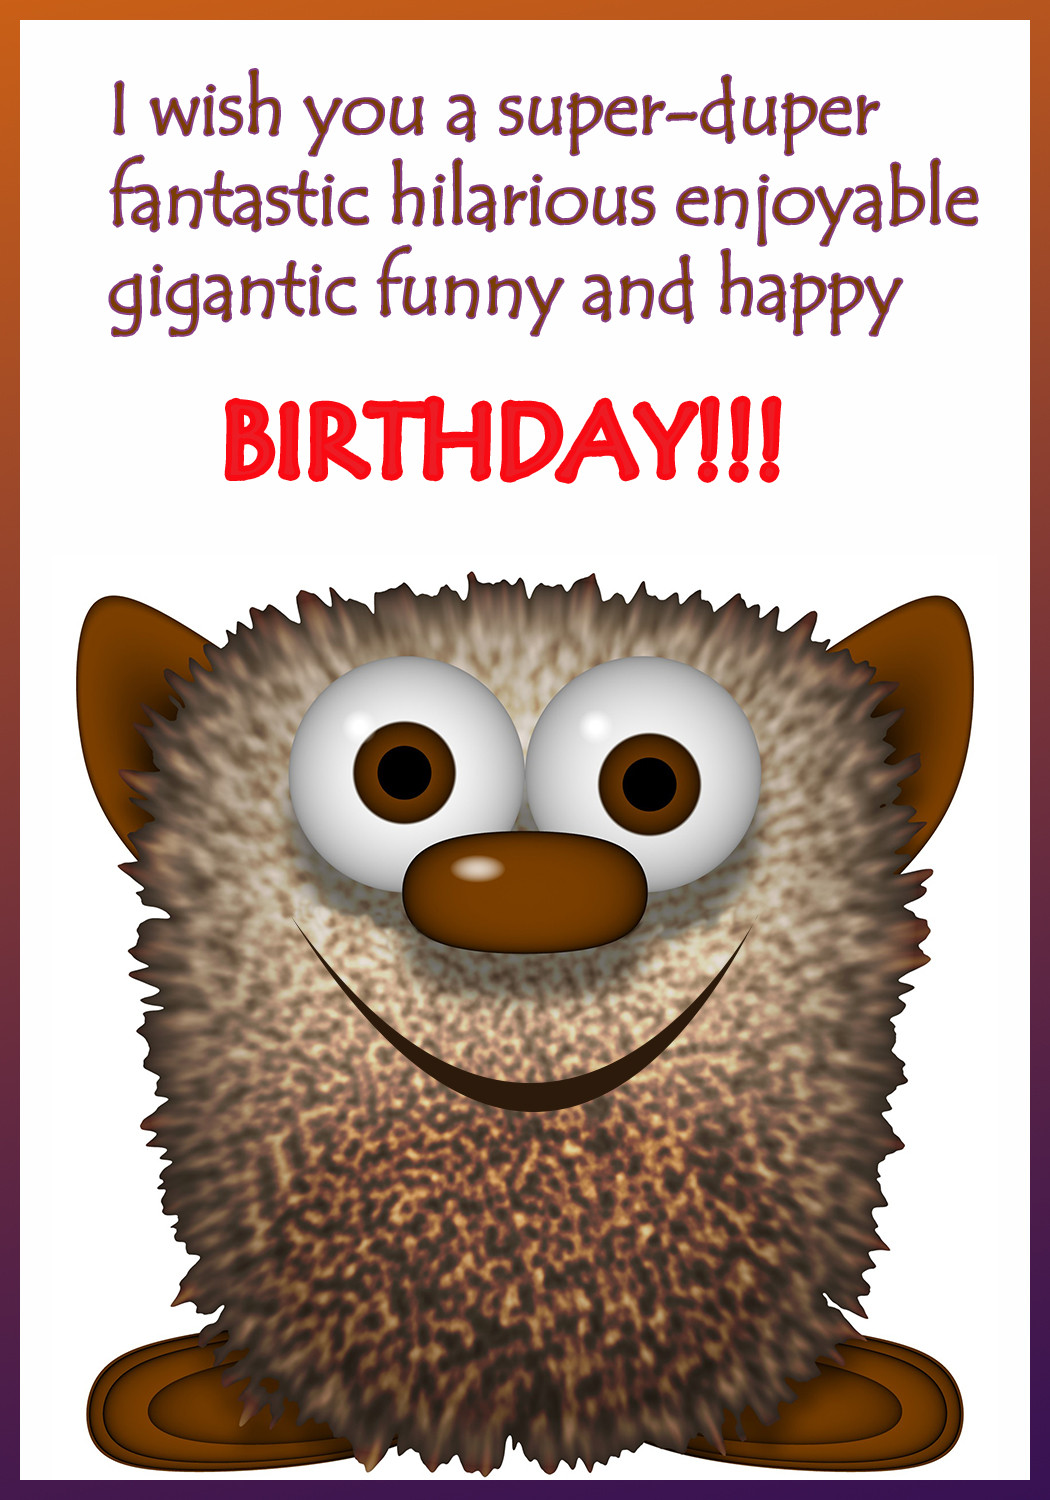 Funny Printable Birthday Card
 Funny Printable Birthday Cards